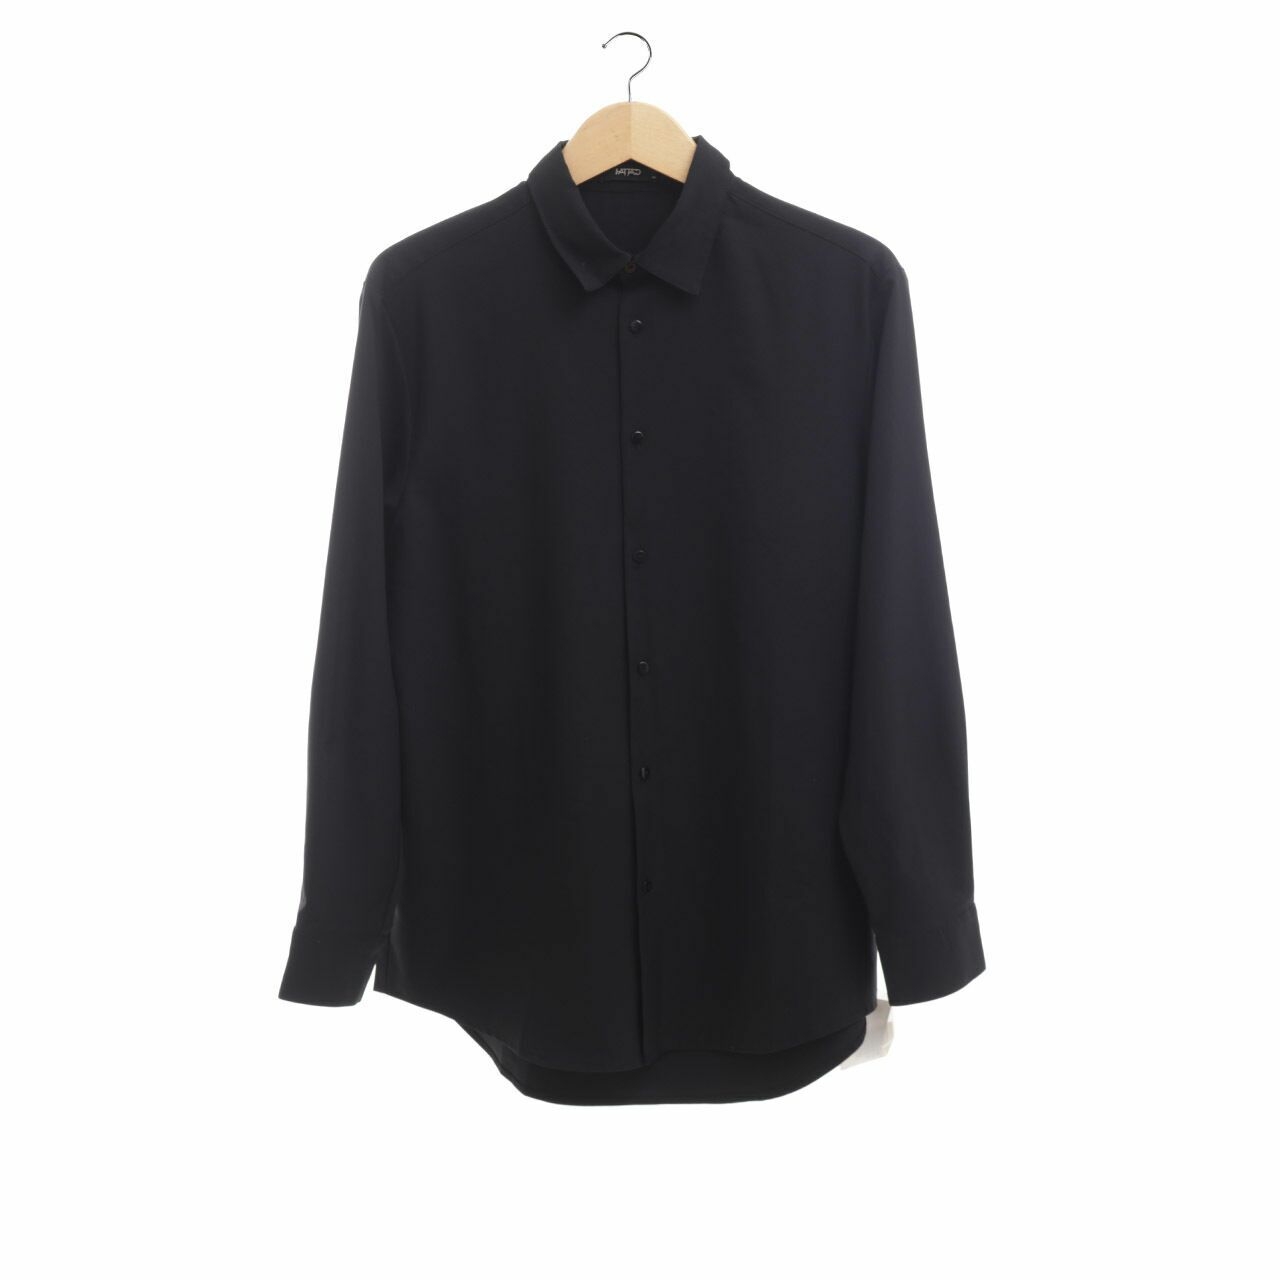 Hattaco Black Shirt